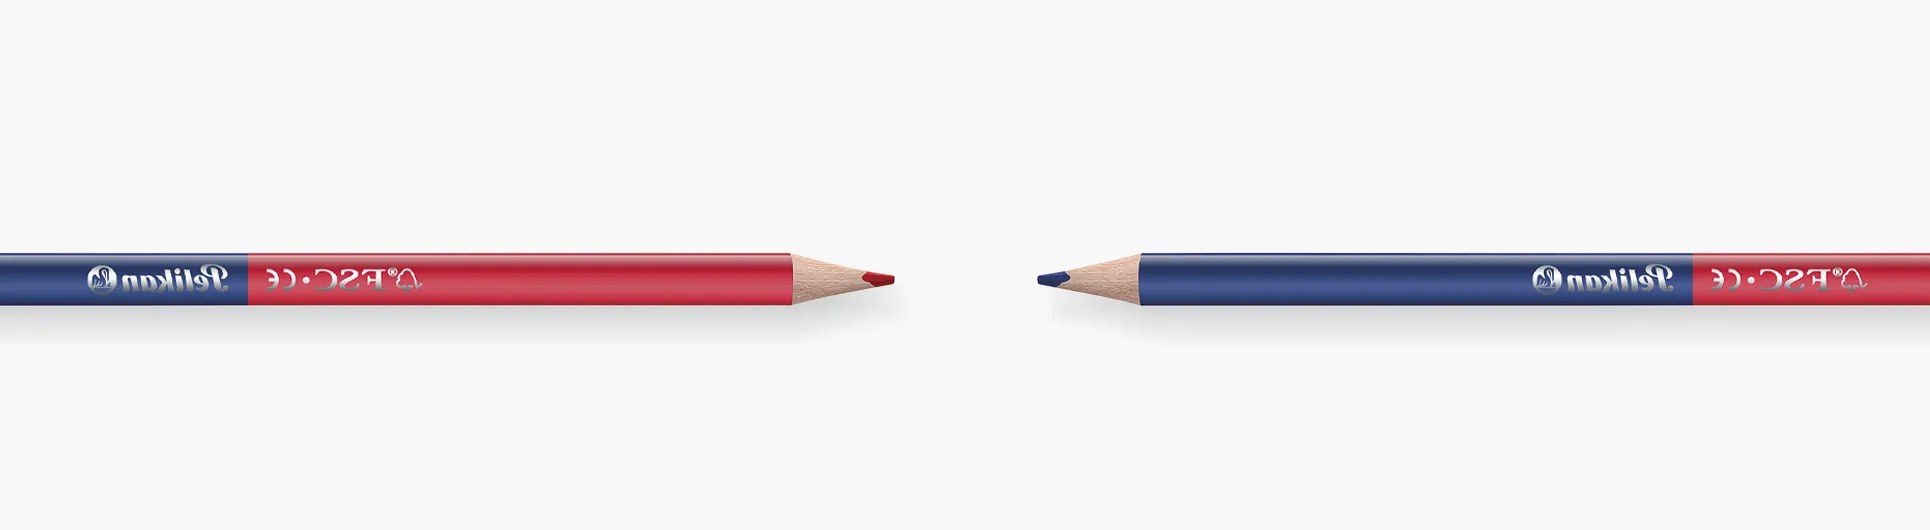 Creioane groase triunghiulare, bicolore: roșu-albastru